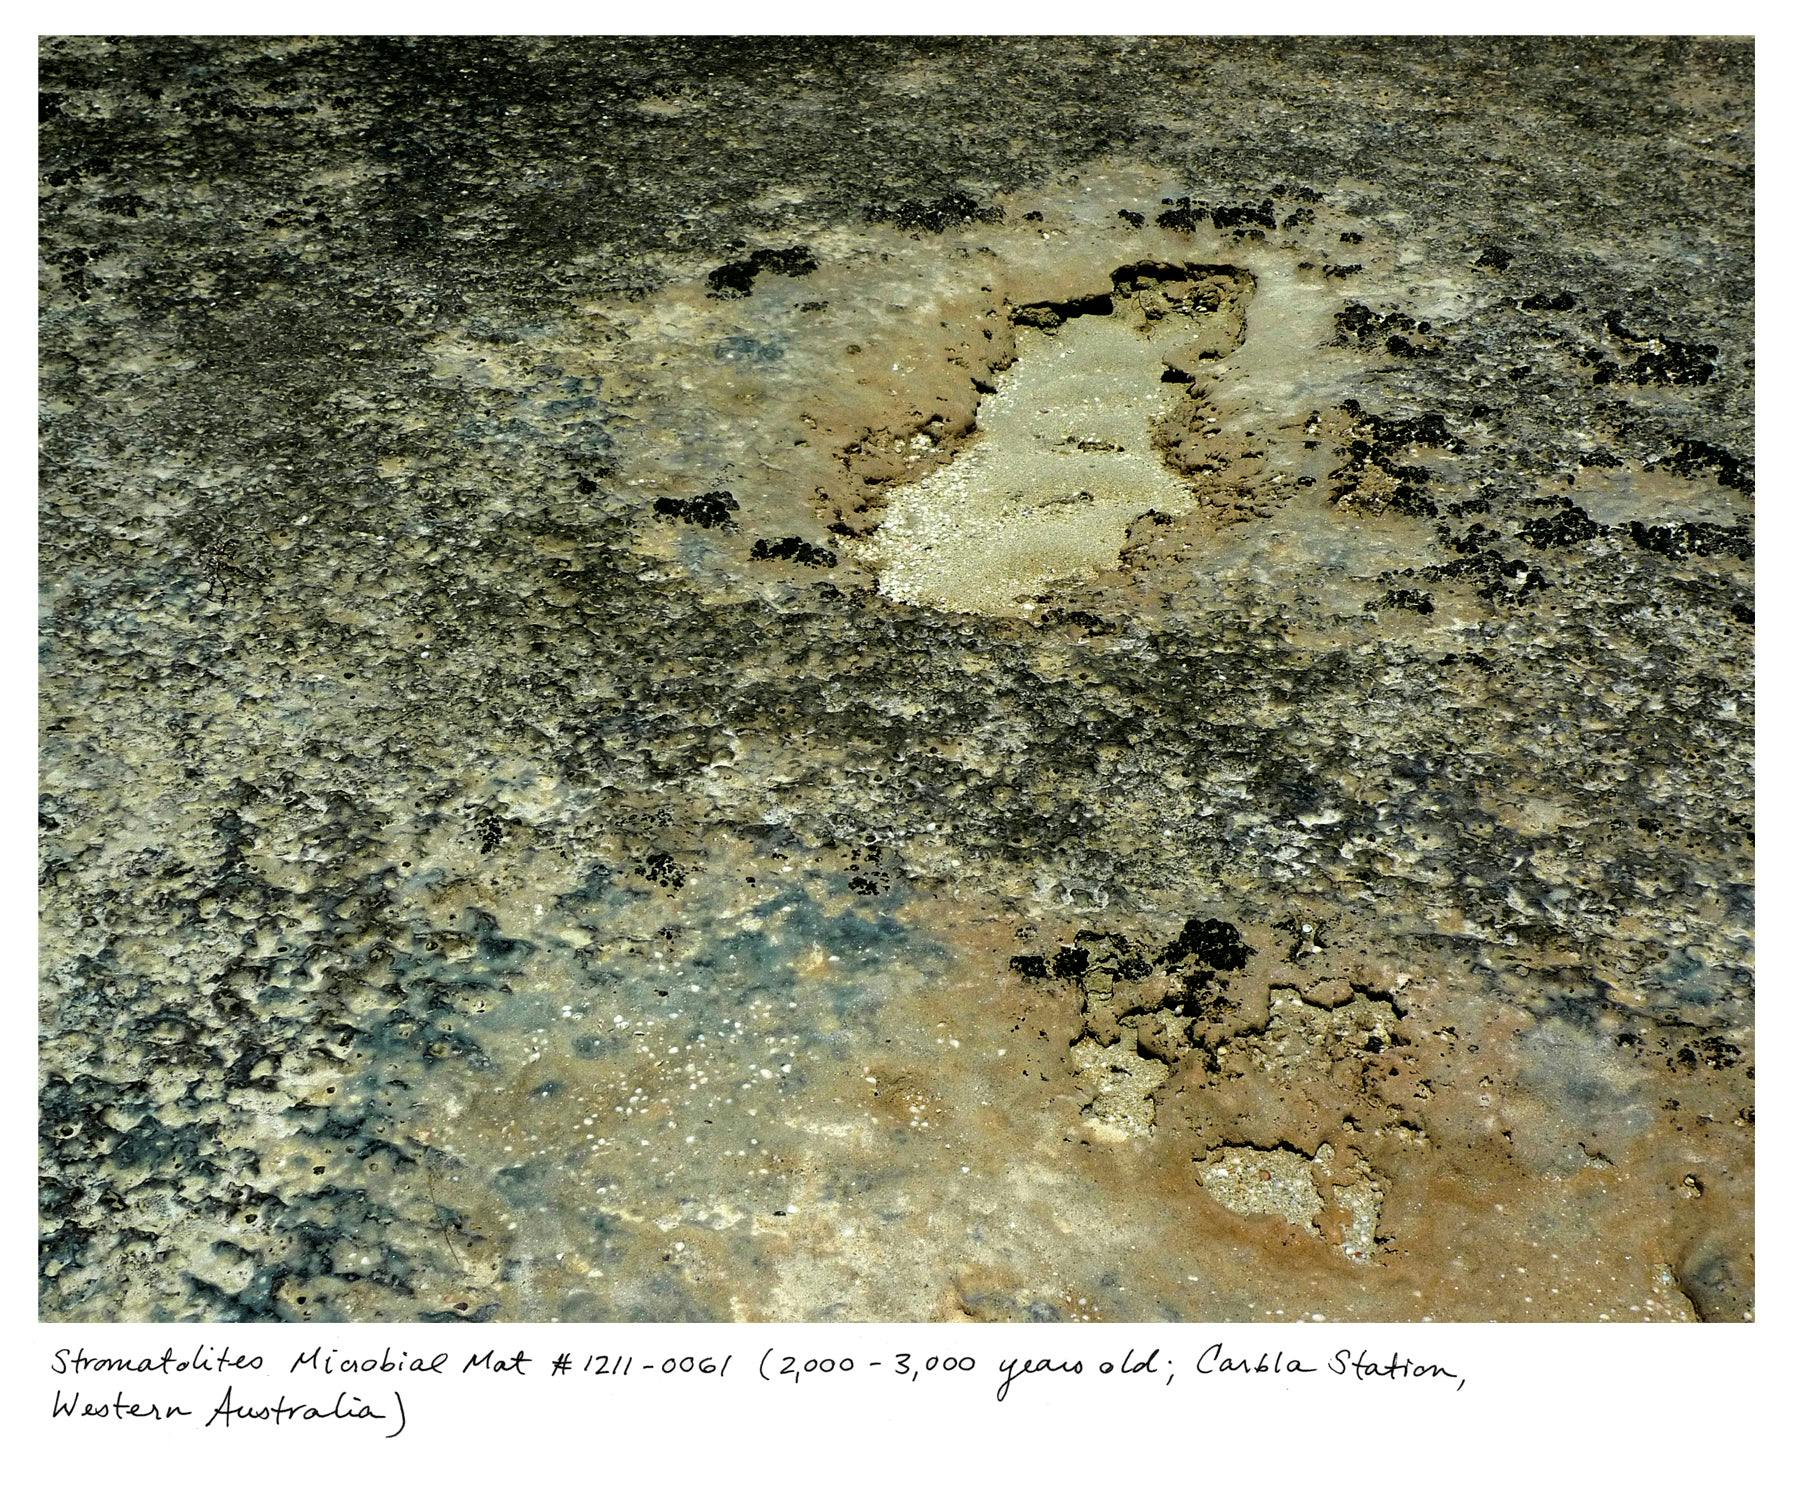 Rachel Sussman - Microbial Mat (2,000 - 3,000 years old; Carbla Station, Western Australia) - Photography